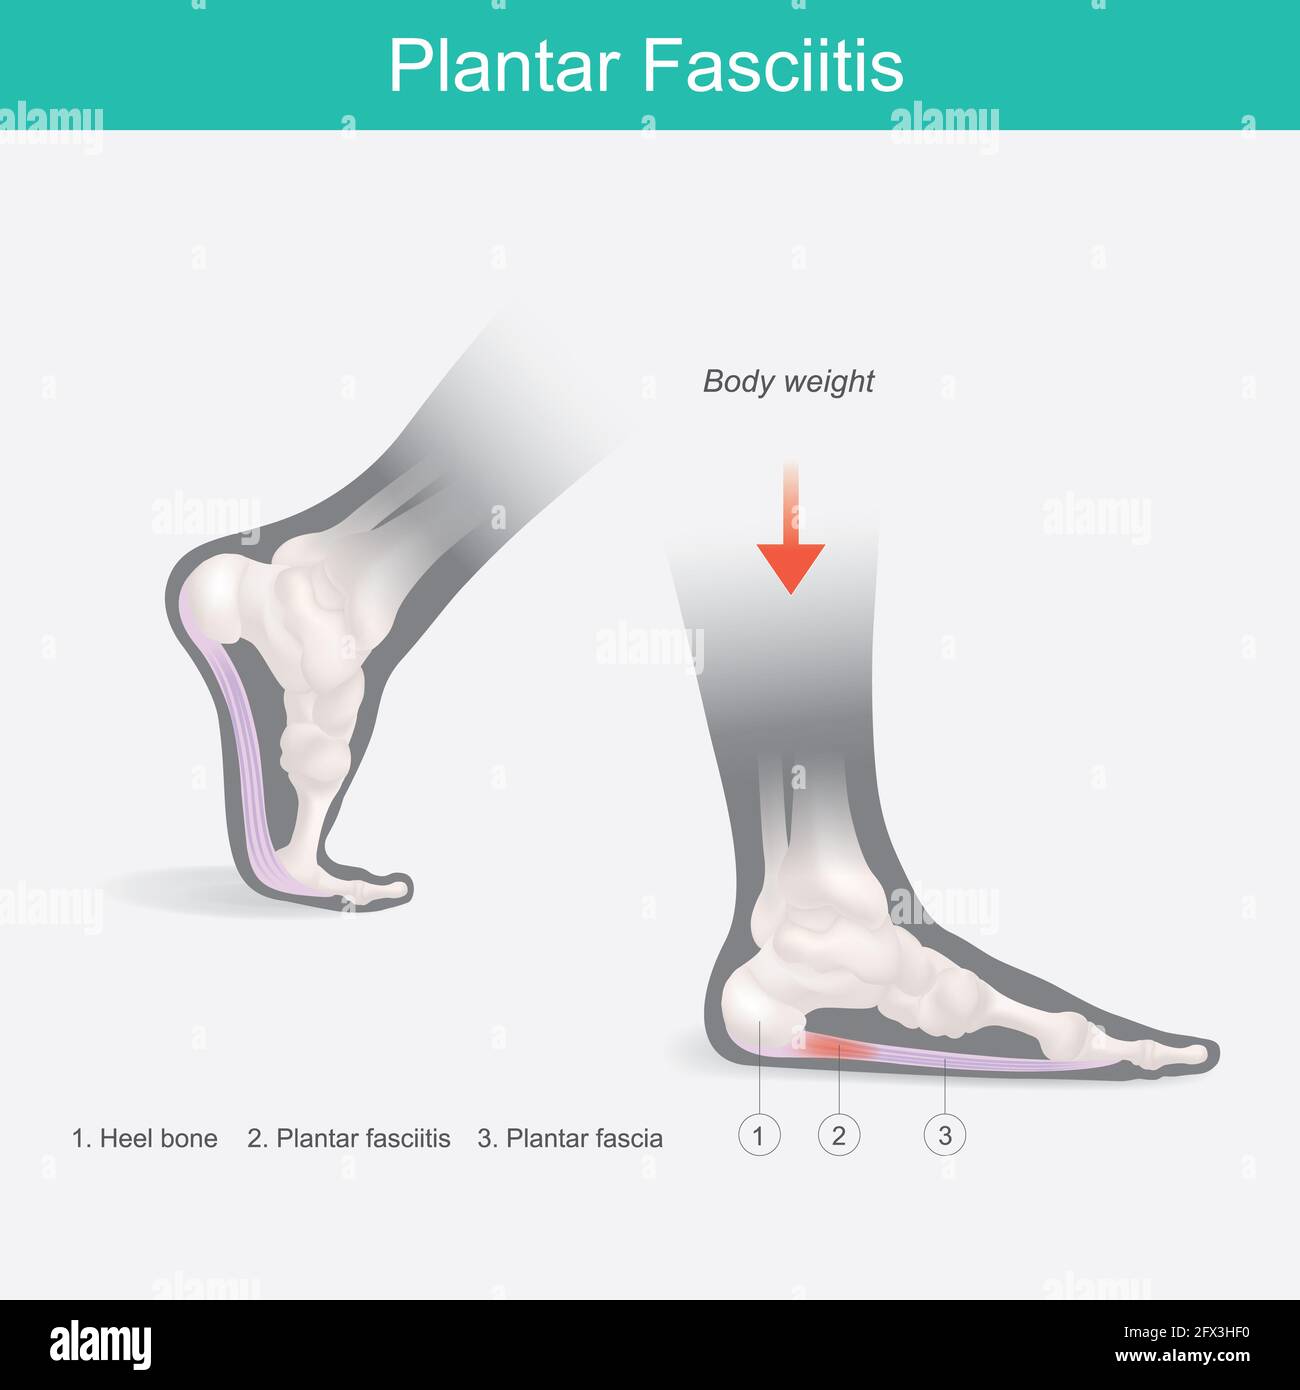 Plantar Fasciitis. Illustration human foot anatomy explain on symptom plantar fasciitis. Stock Photo